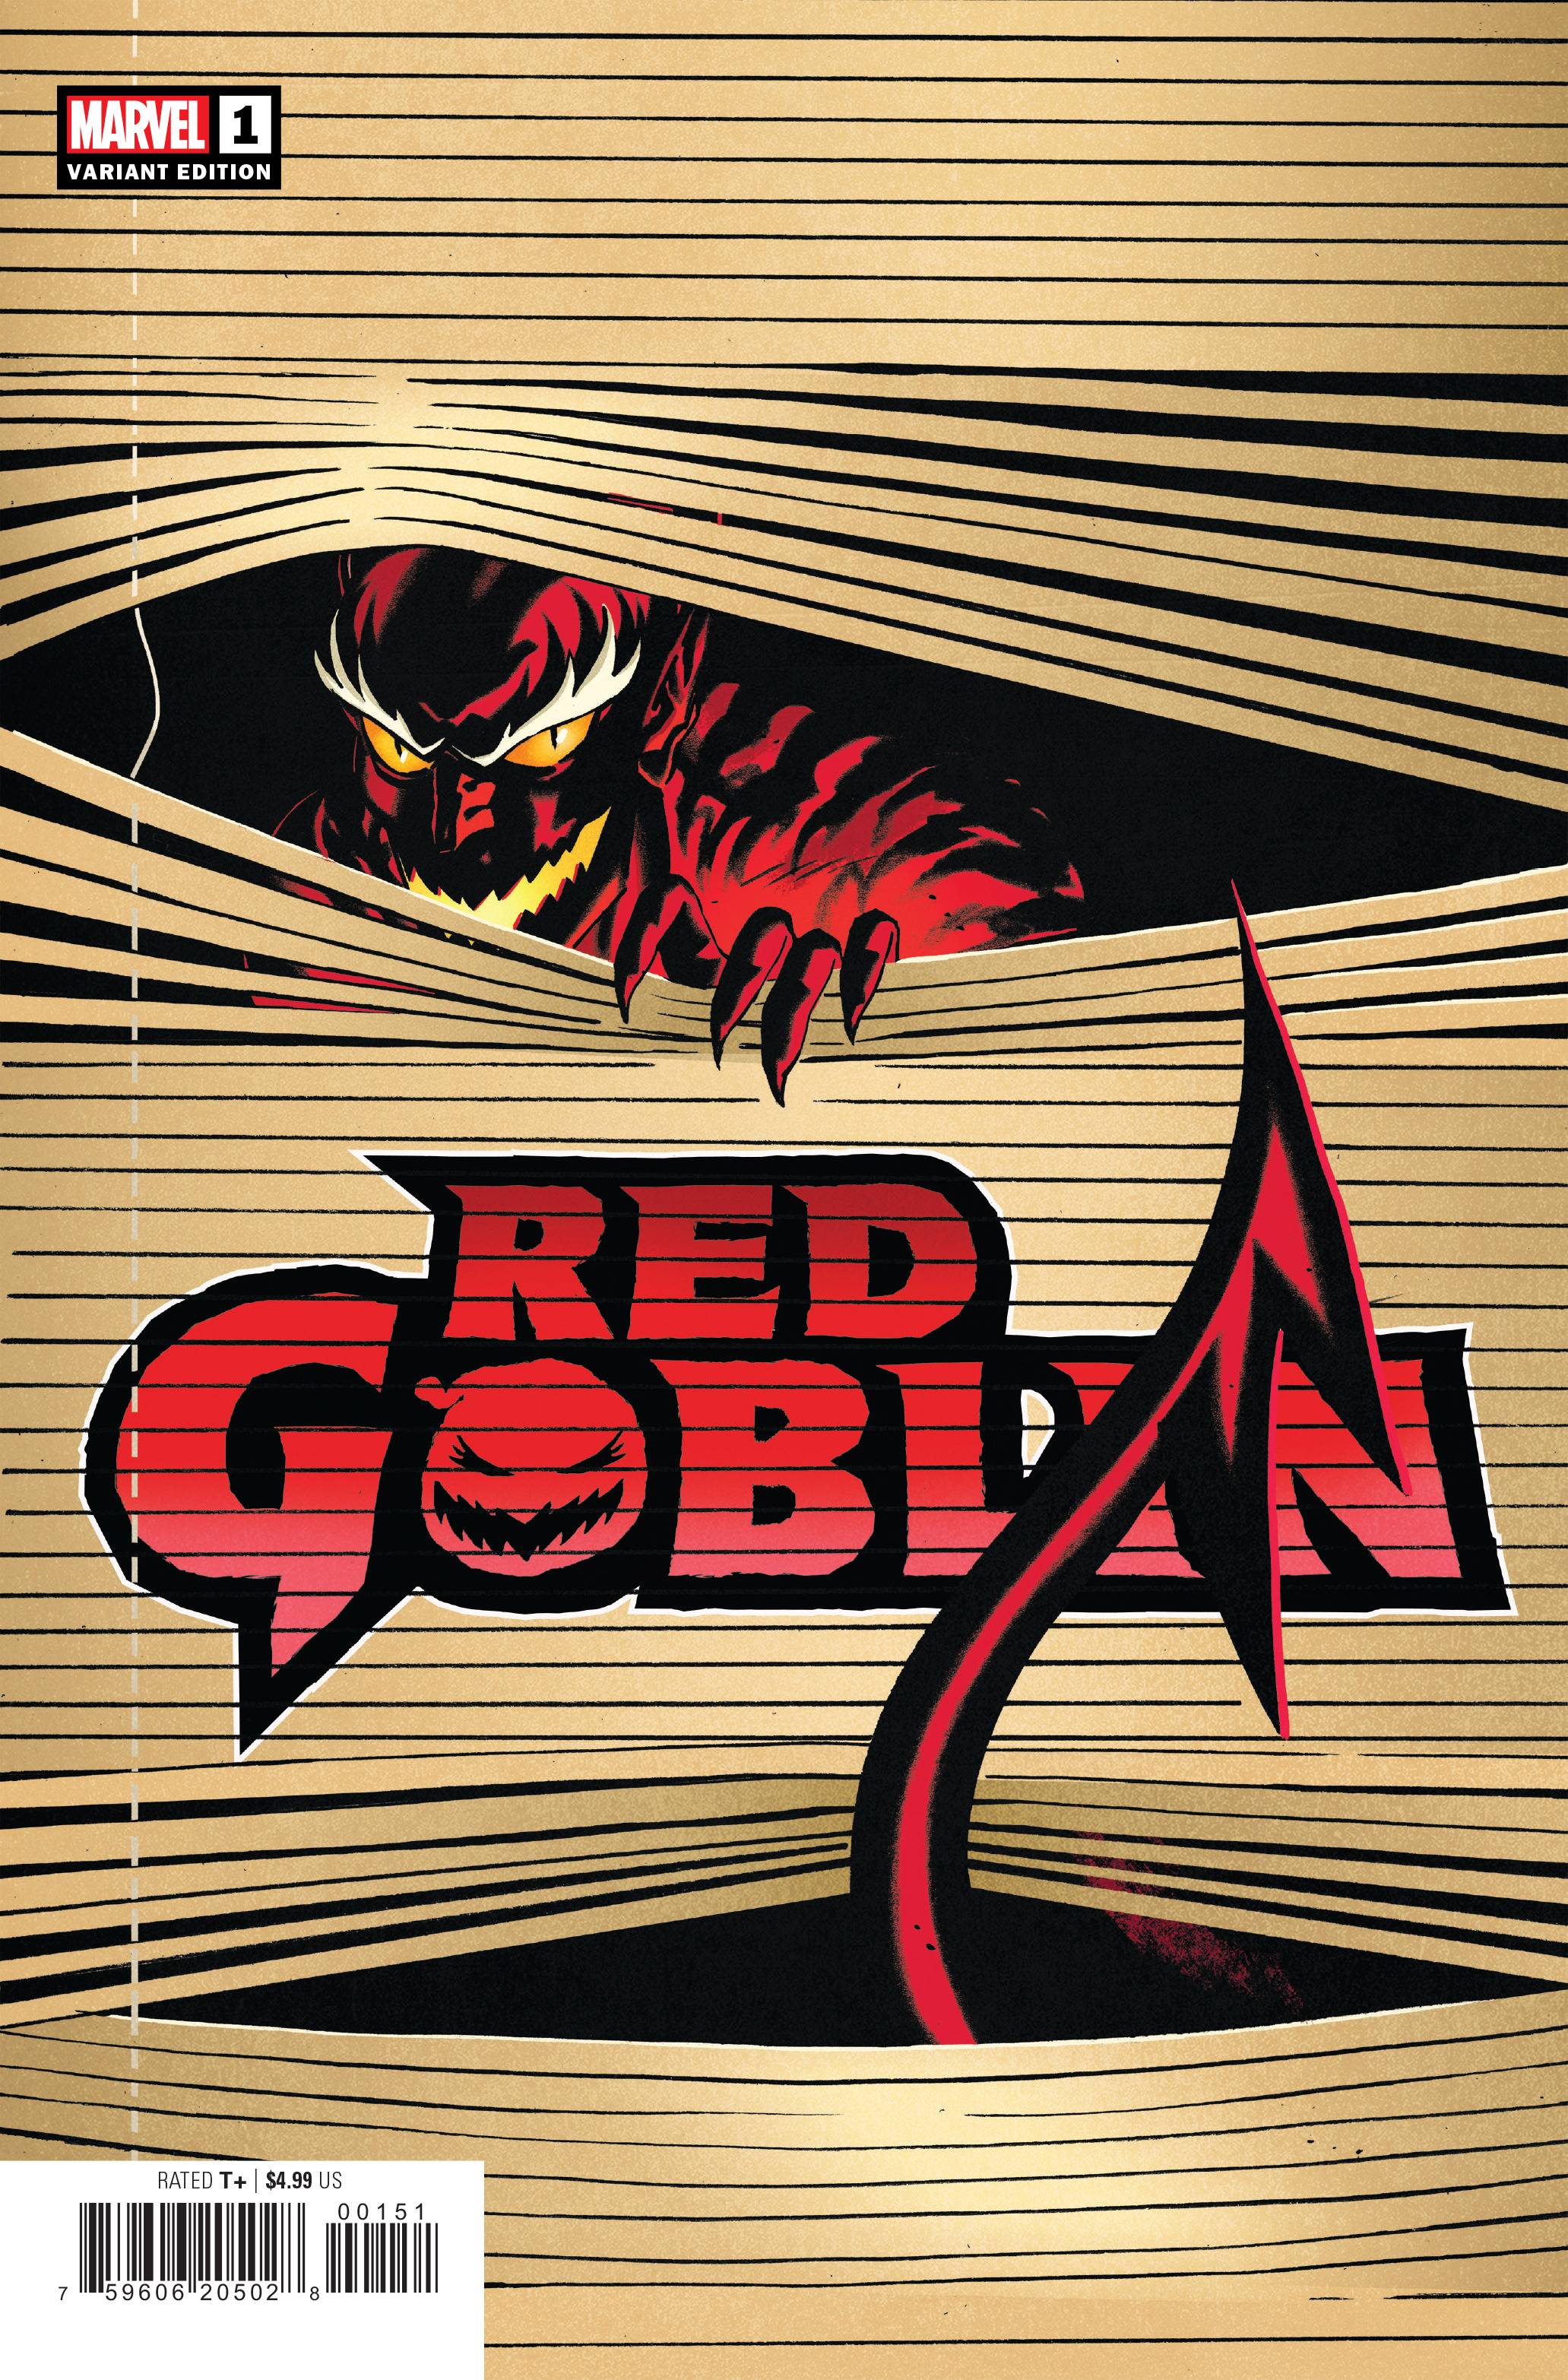 Red Goblin #1 Reilly Windowshades Variant